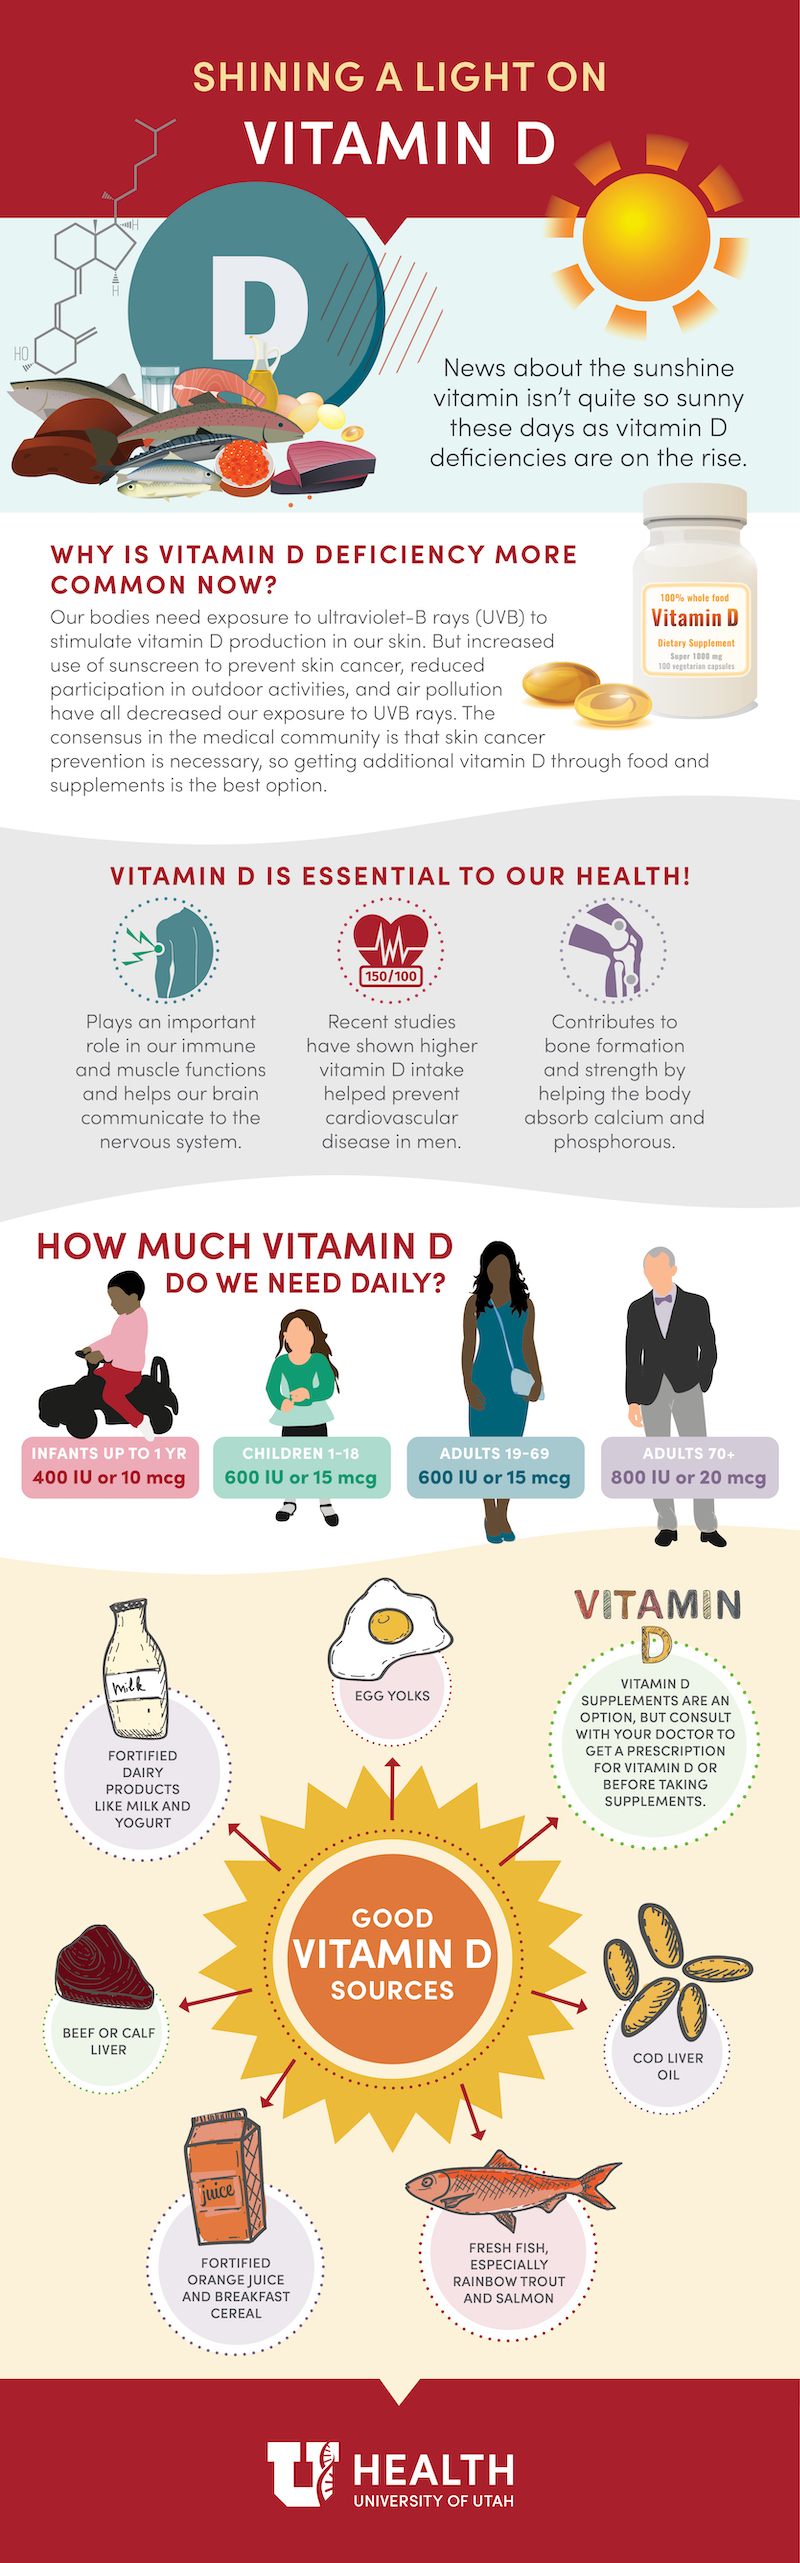 Vitamind Infographic